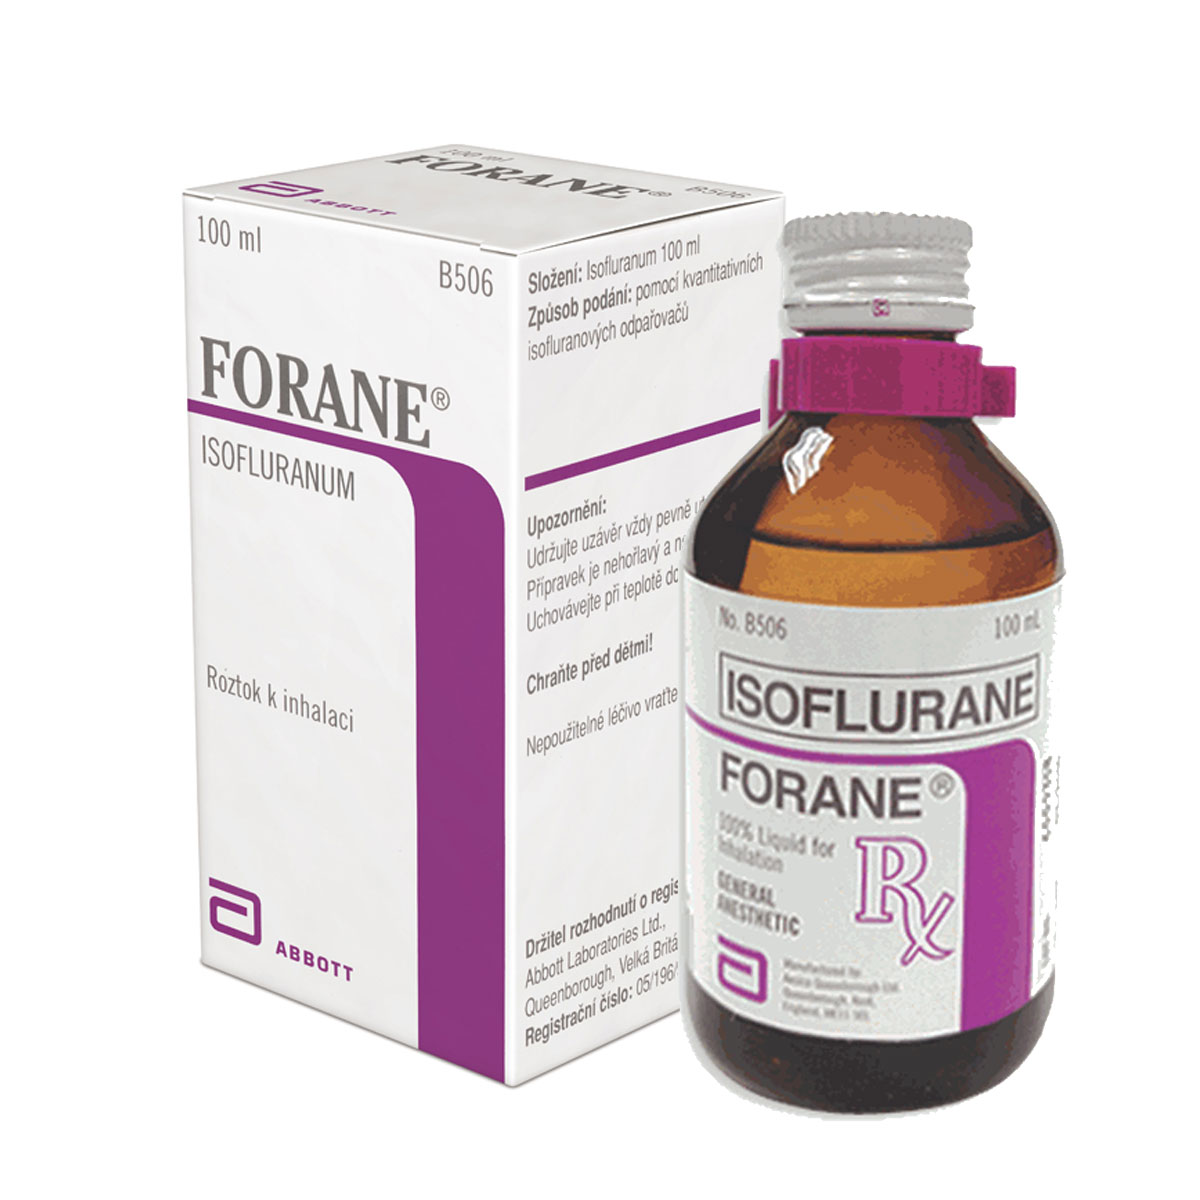 FORANE (imported)